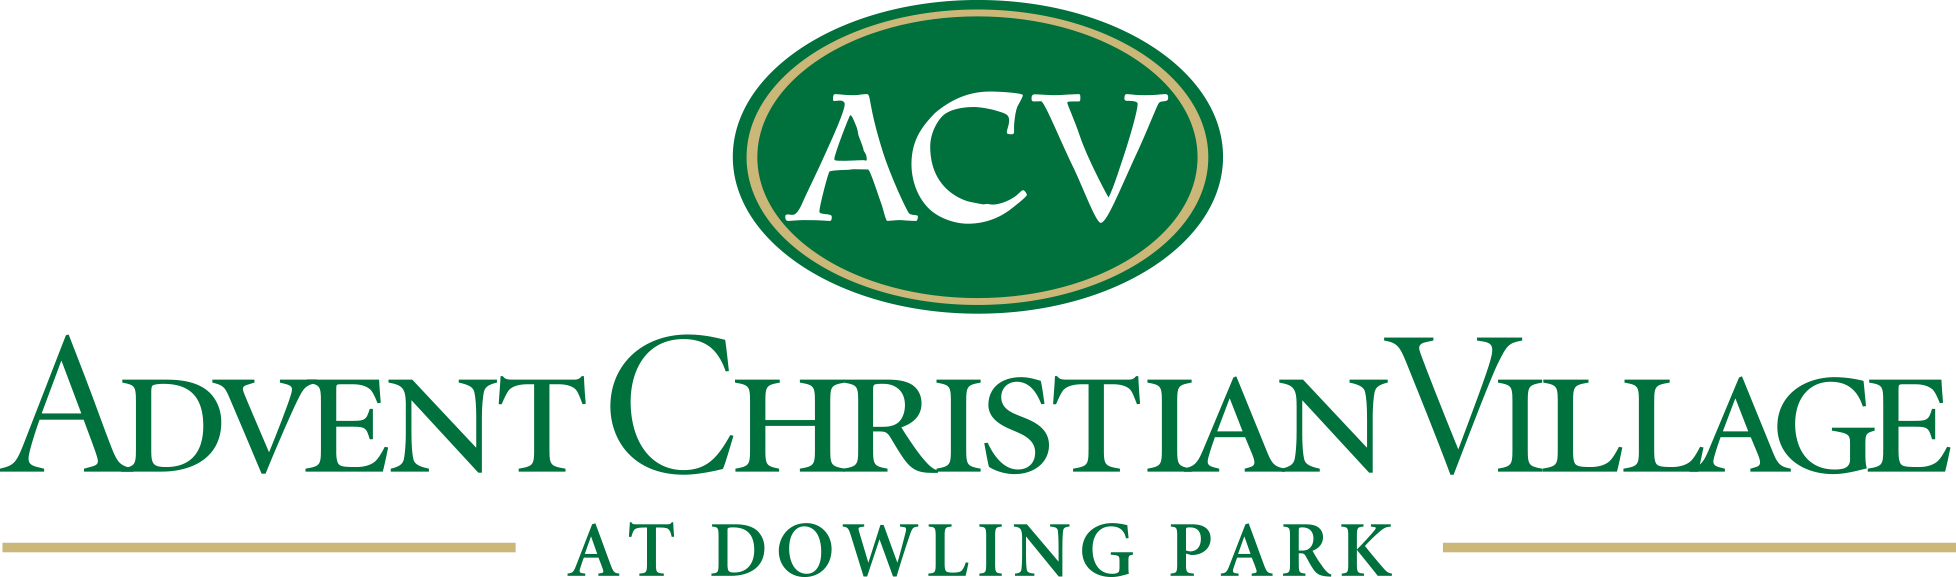 Advent Christian Village mobile logo